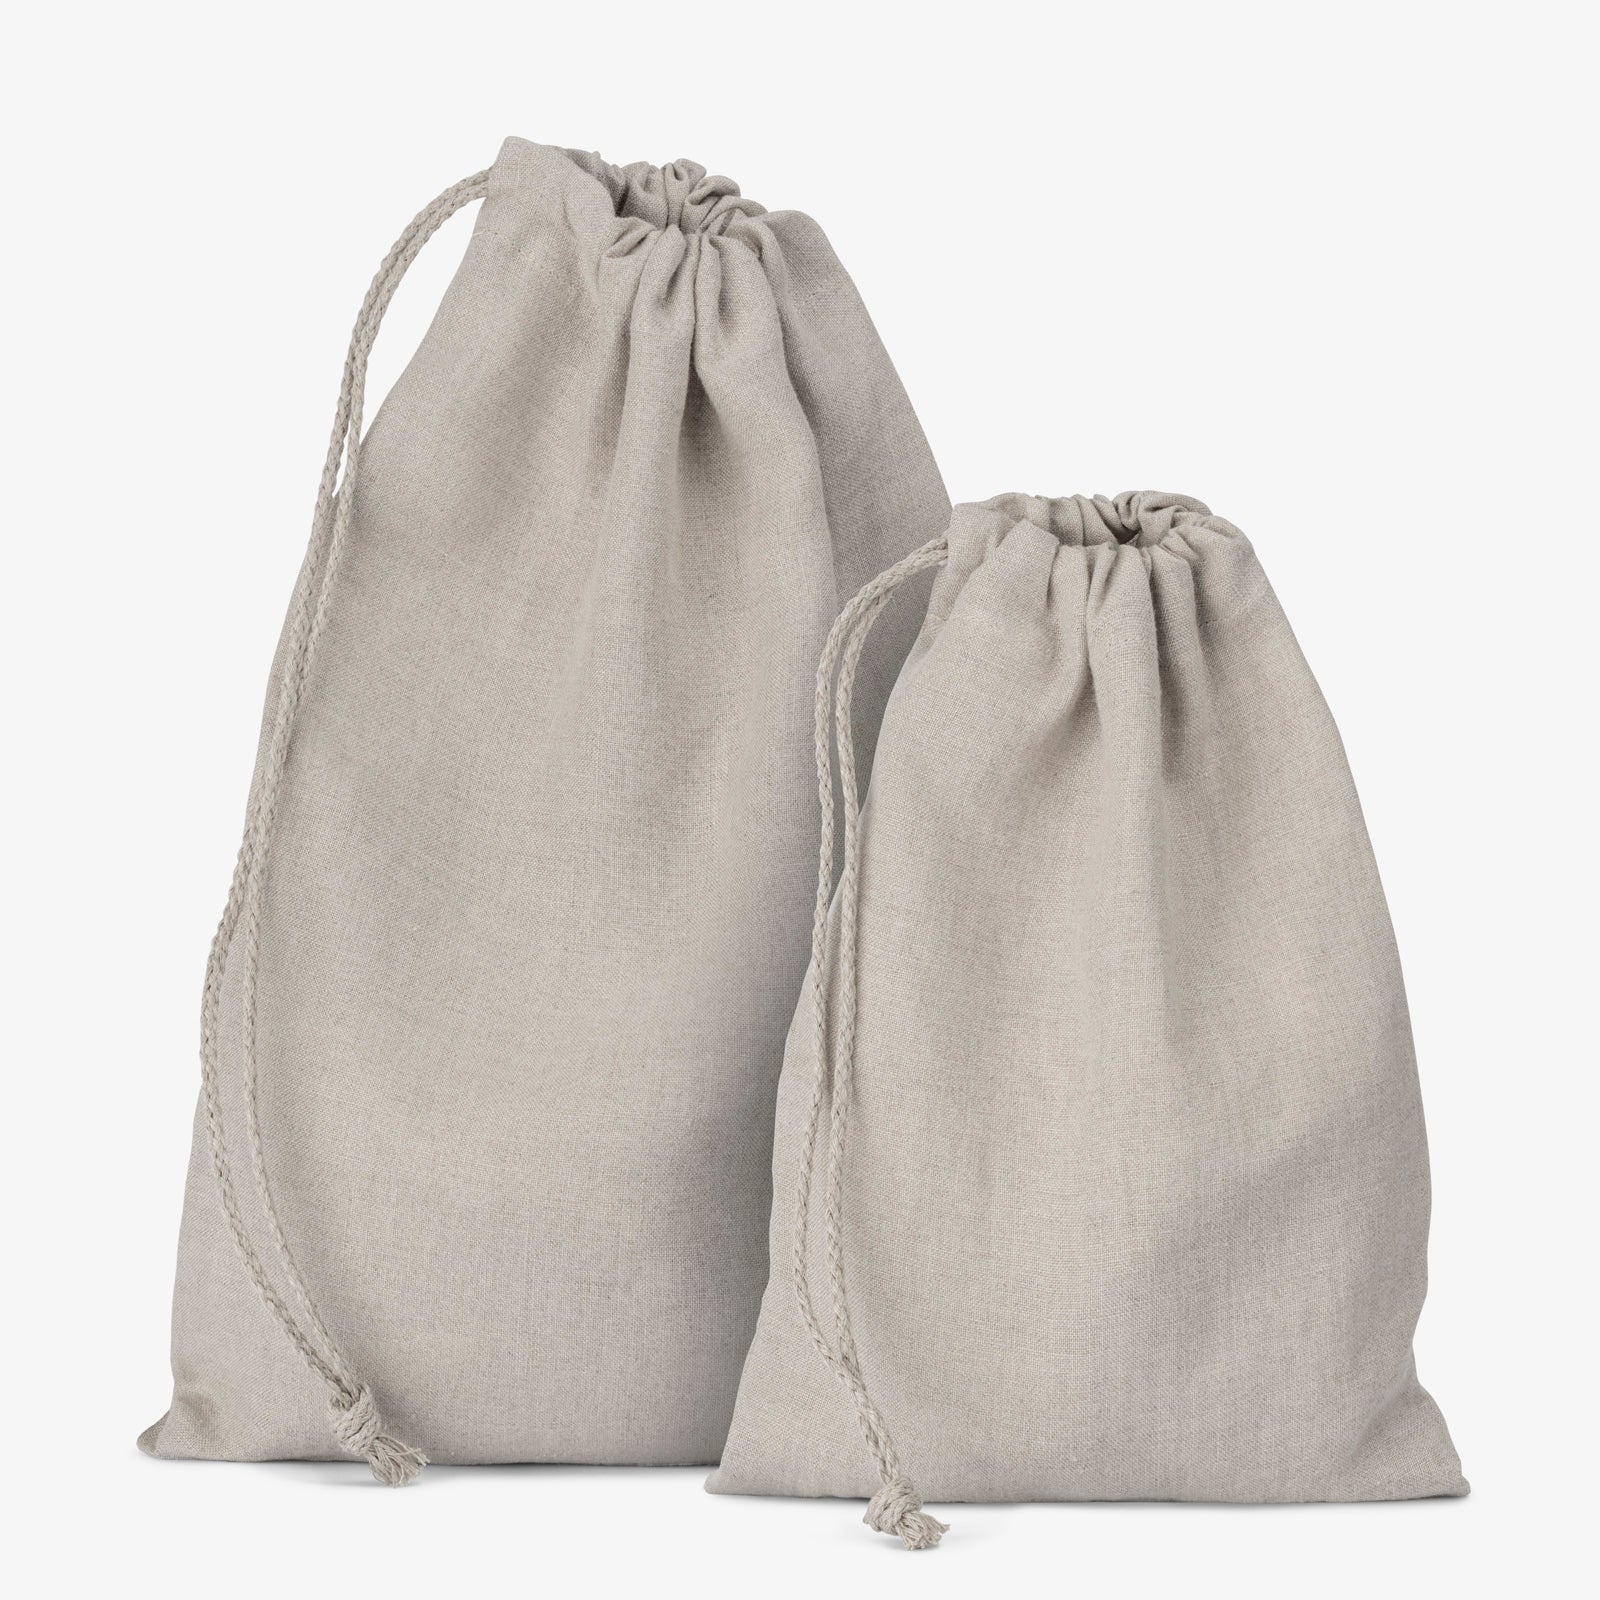 Linen drawstring bag Natural - Organic food storage (20x30cm 